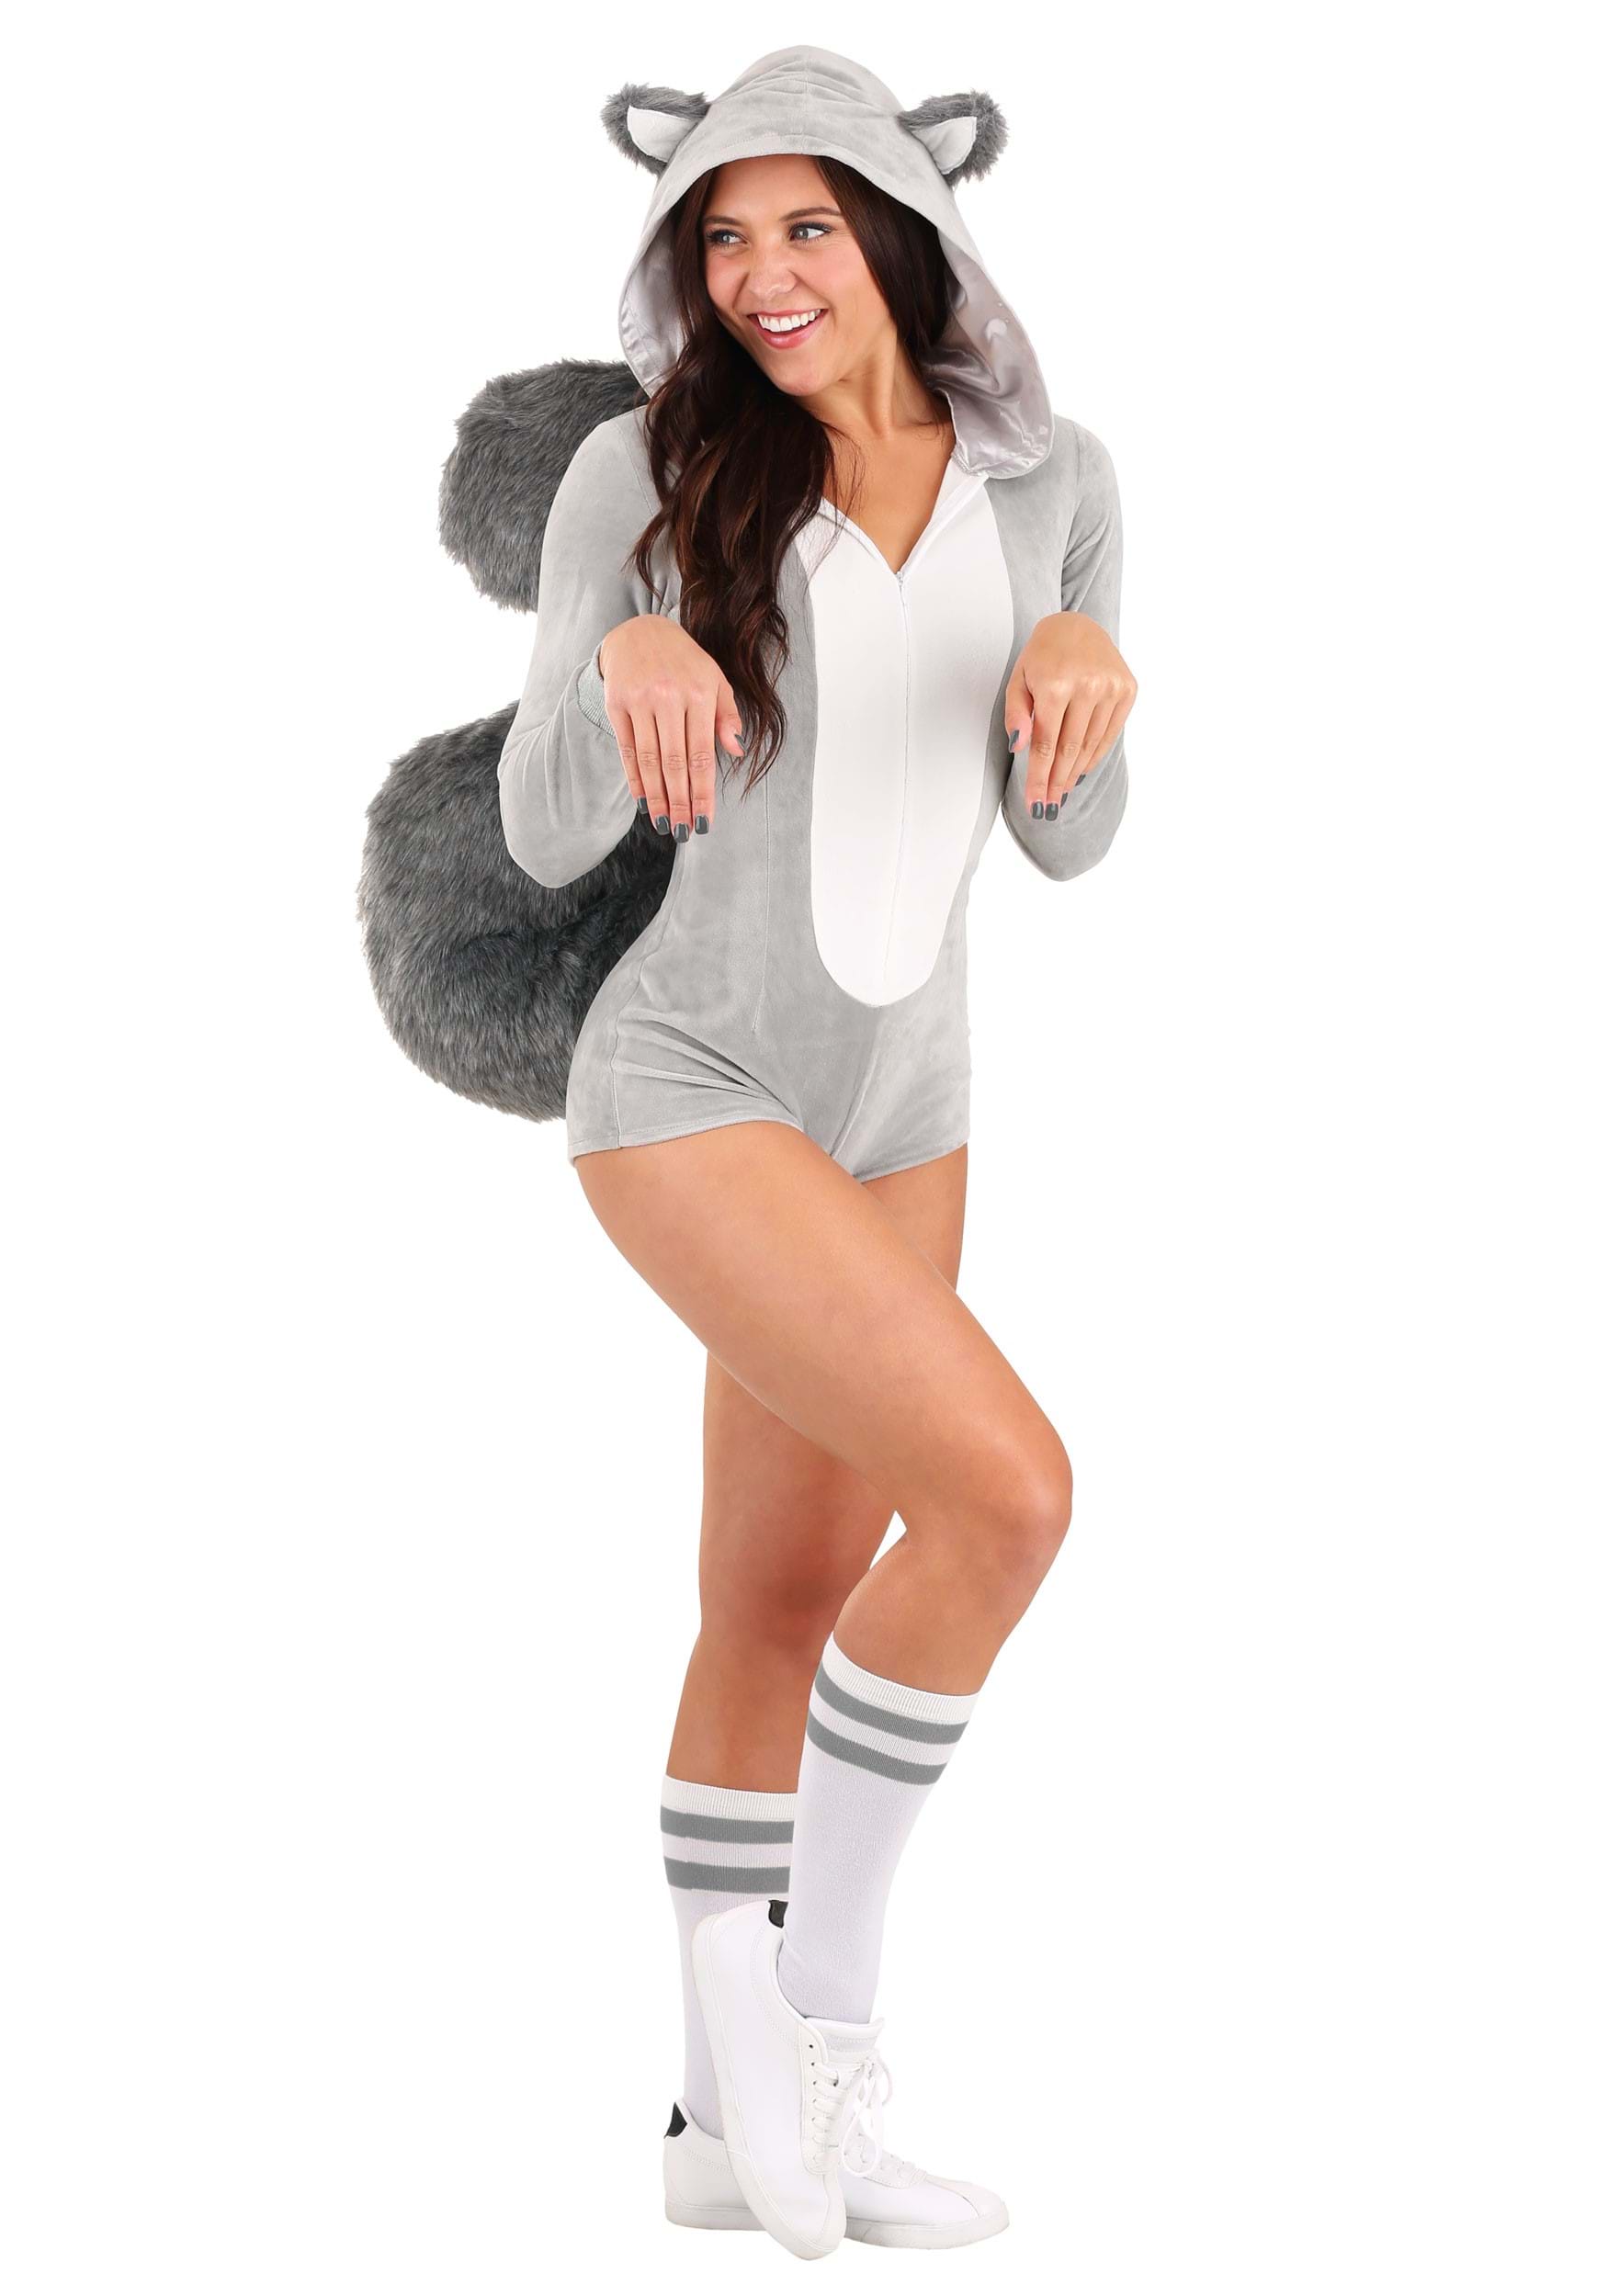 Photos - Fancy Dress Sassy FUN Costumes  Squirrel Women's Costume Gray/White 